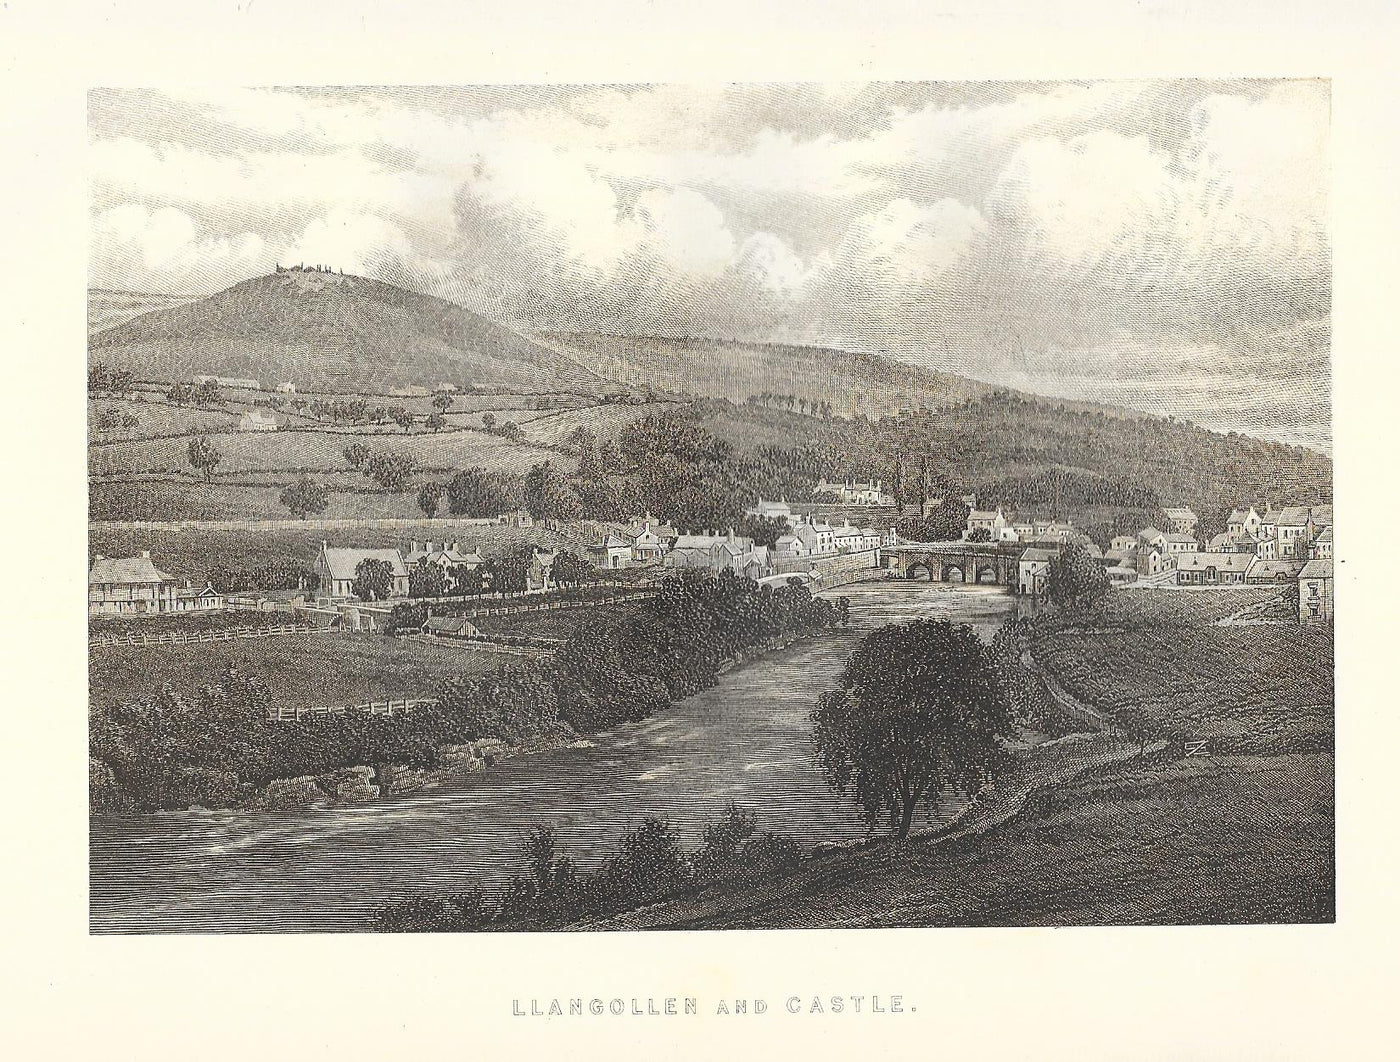 Llangollen Denbighshire Wales antique print